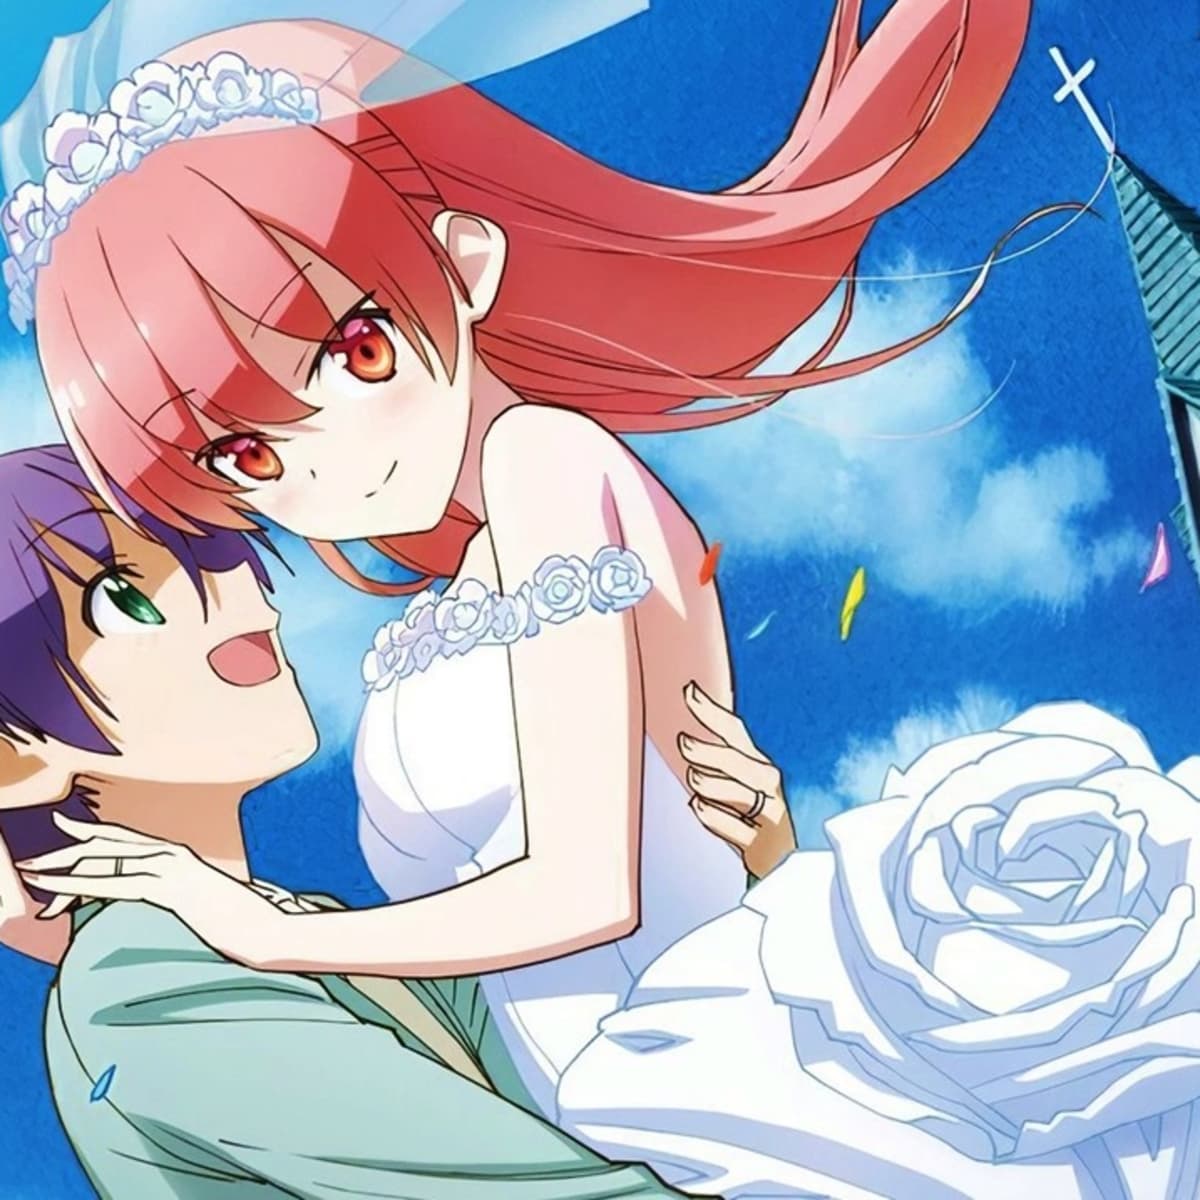 Tonikaku Kawaii Episode 1 Discussion  Gallery  Anime Shelter  Anime  Anime romance Kawaii anime